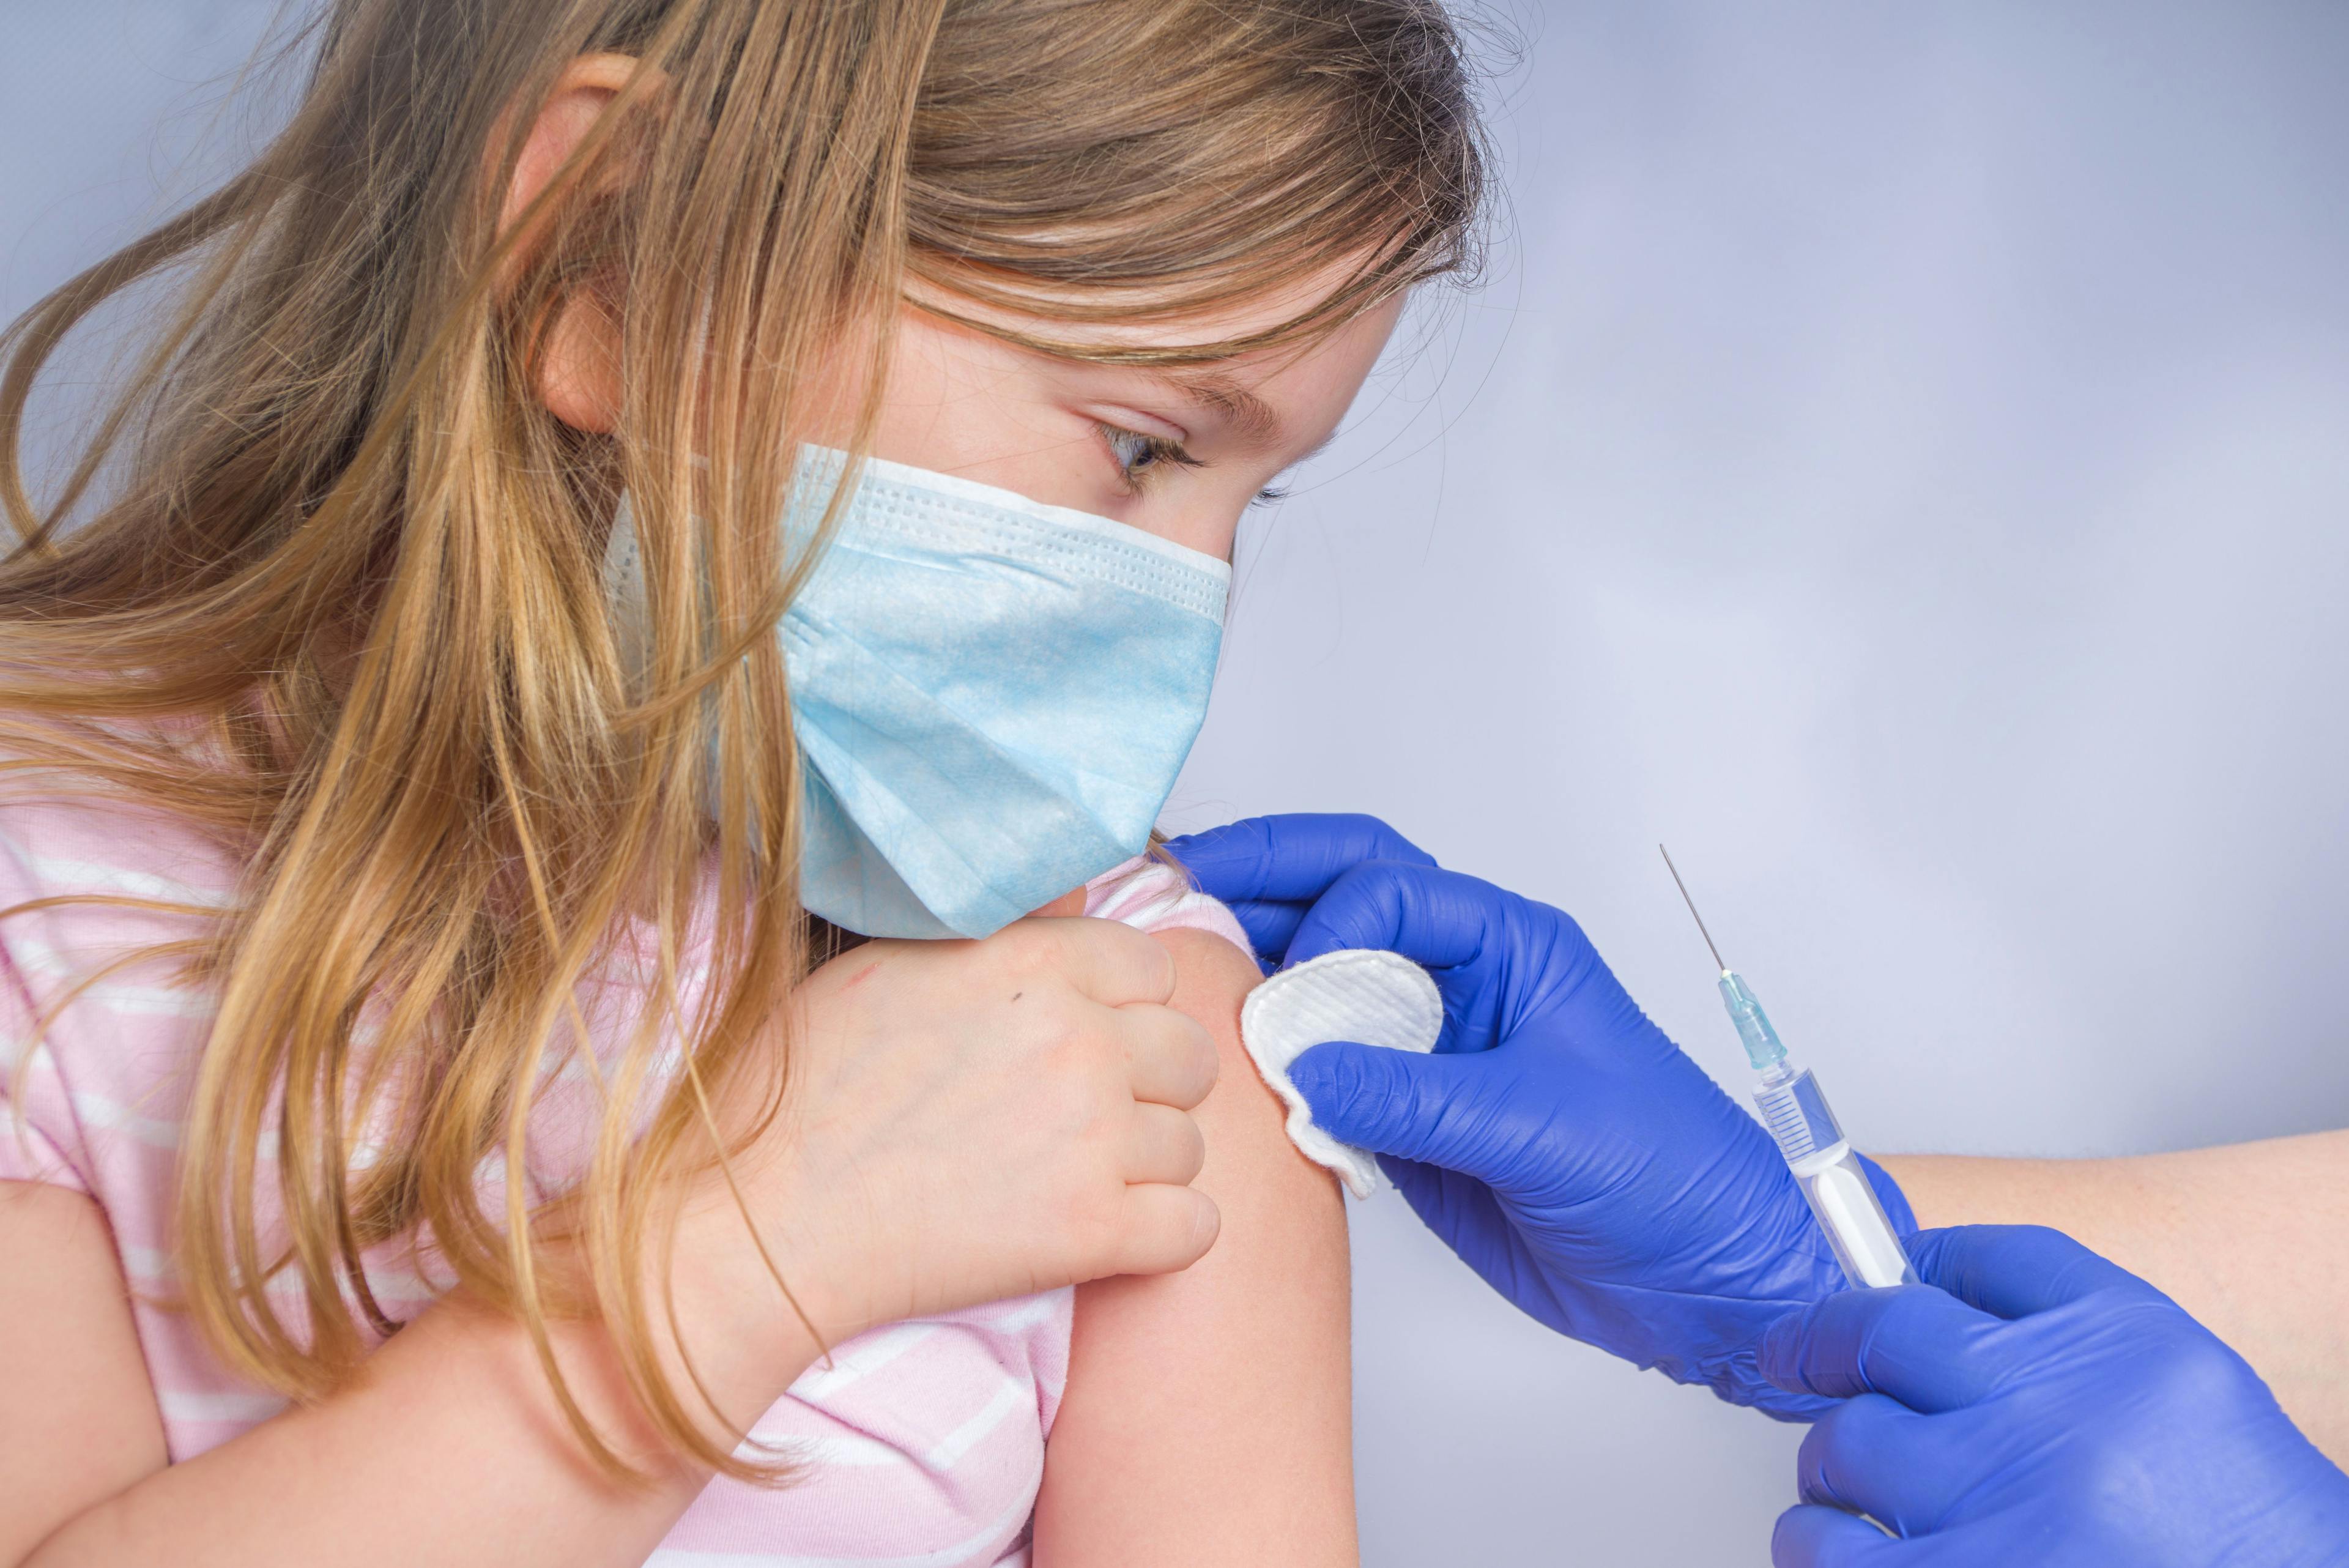 How Pharmacists Should Talk So Vaccine-Hesitant Parents Listen